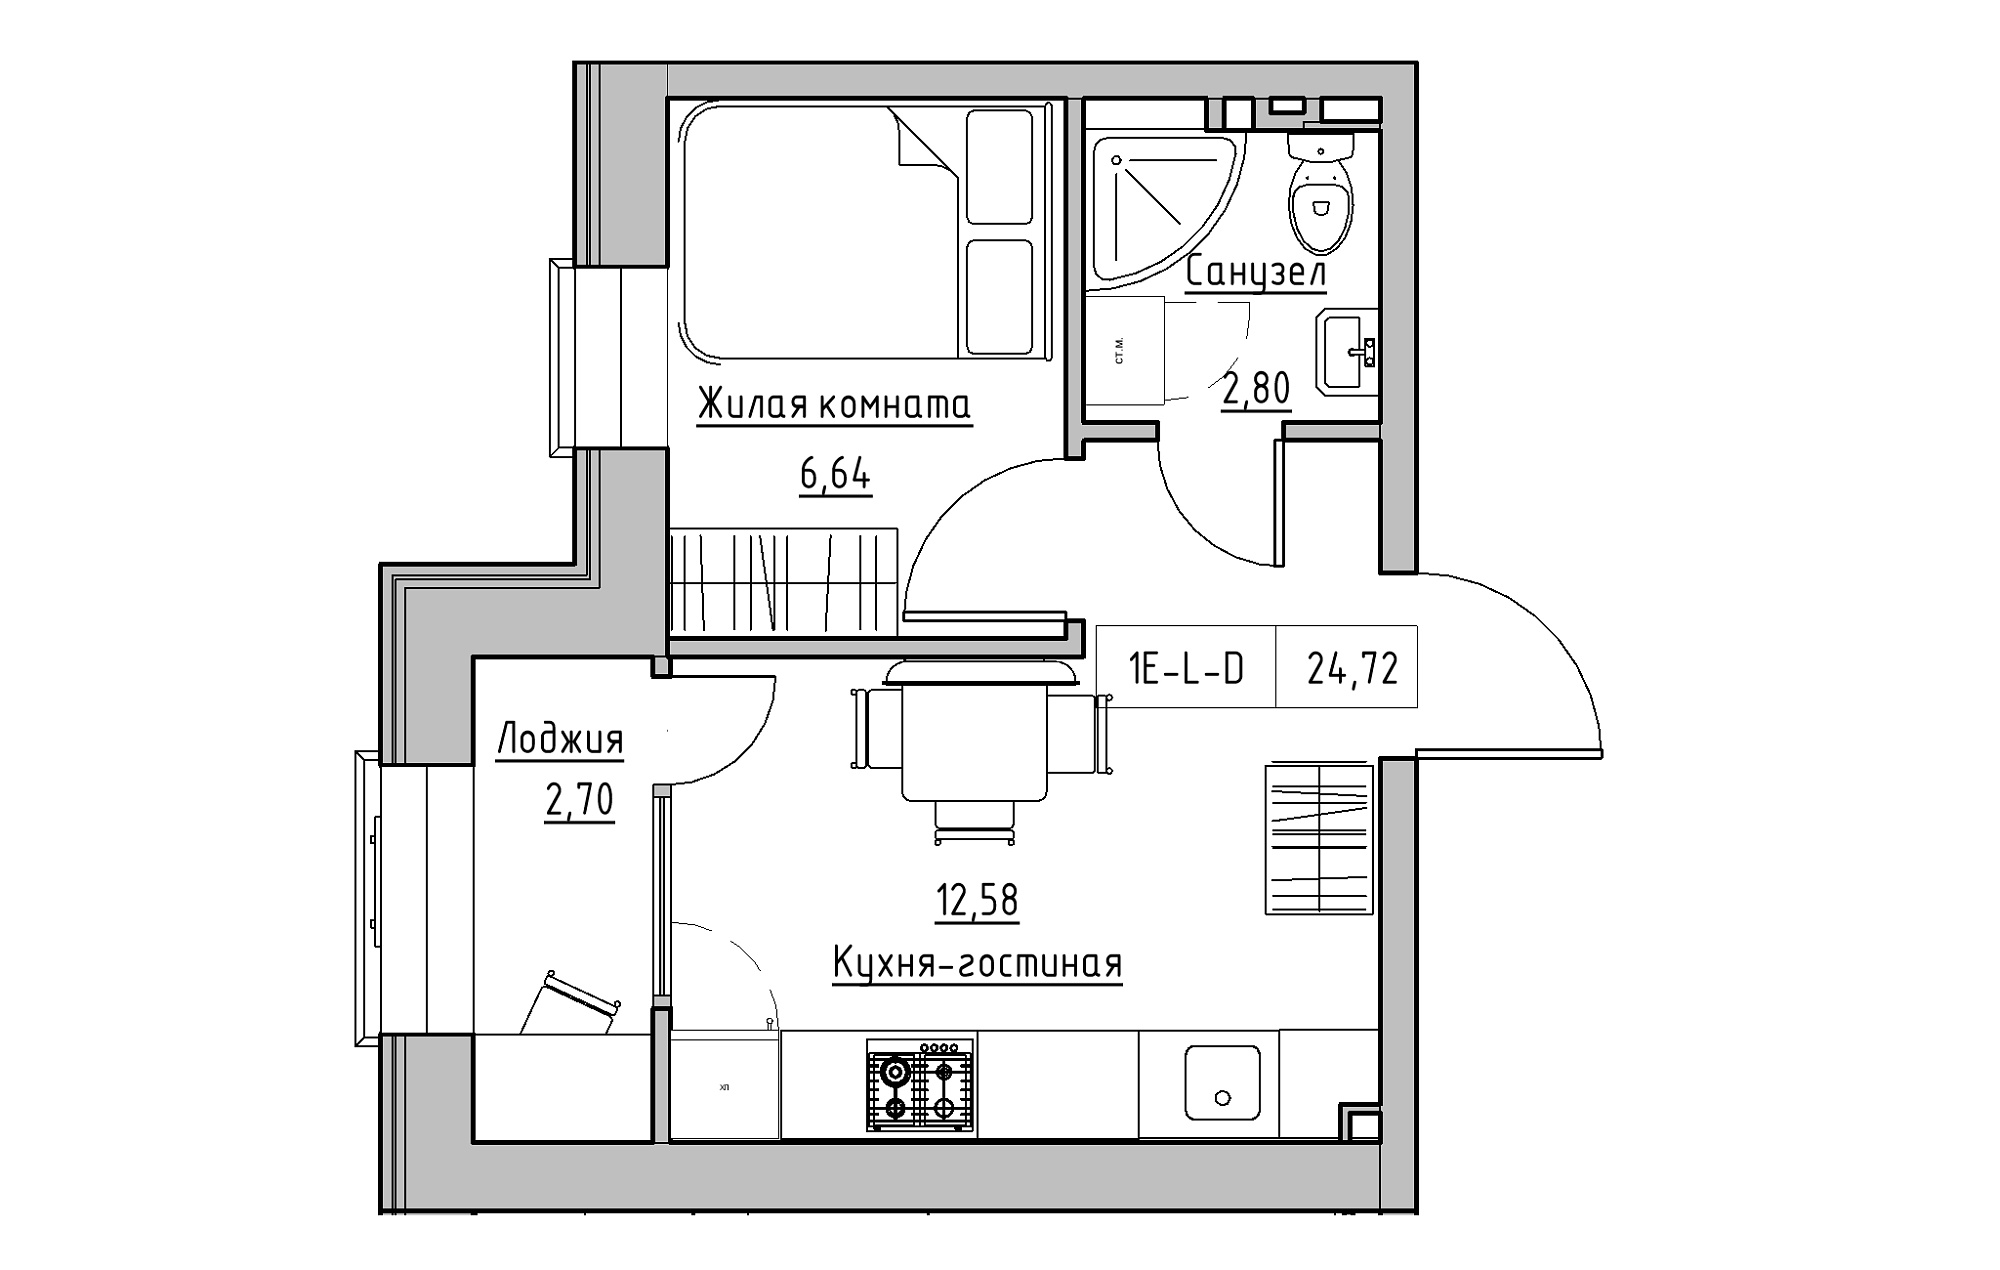 Planning 1-rm flats area 24.72m2, KS-018-01/0013.